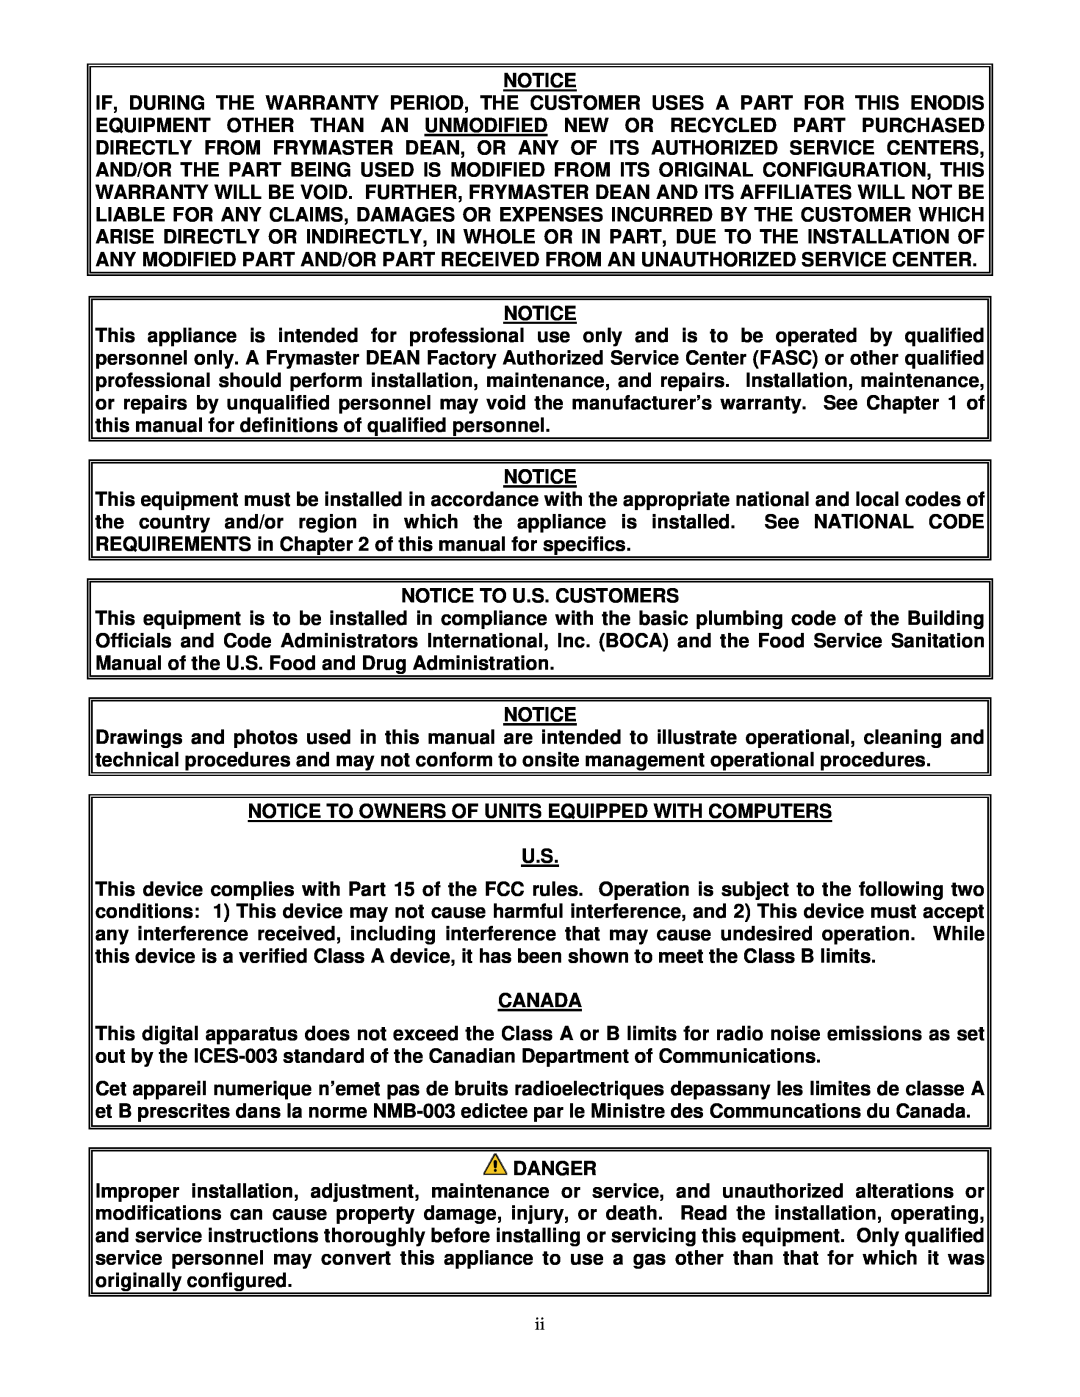 Frymaster 8195991 operation manual Notice To U.S. Customers 